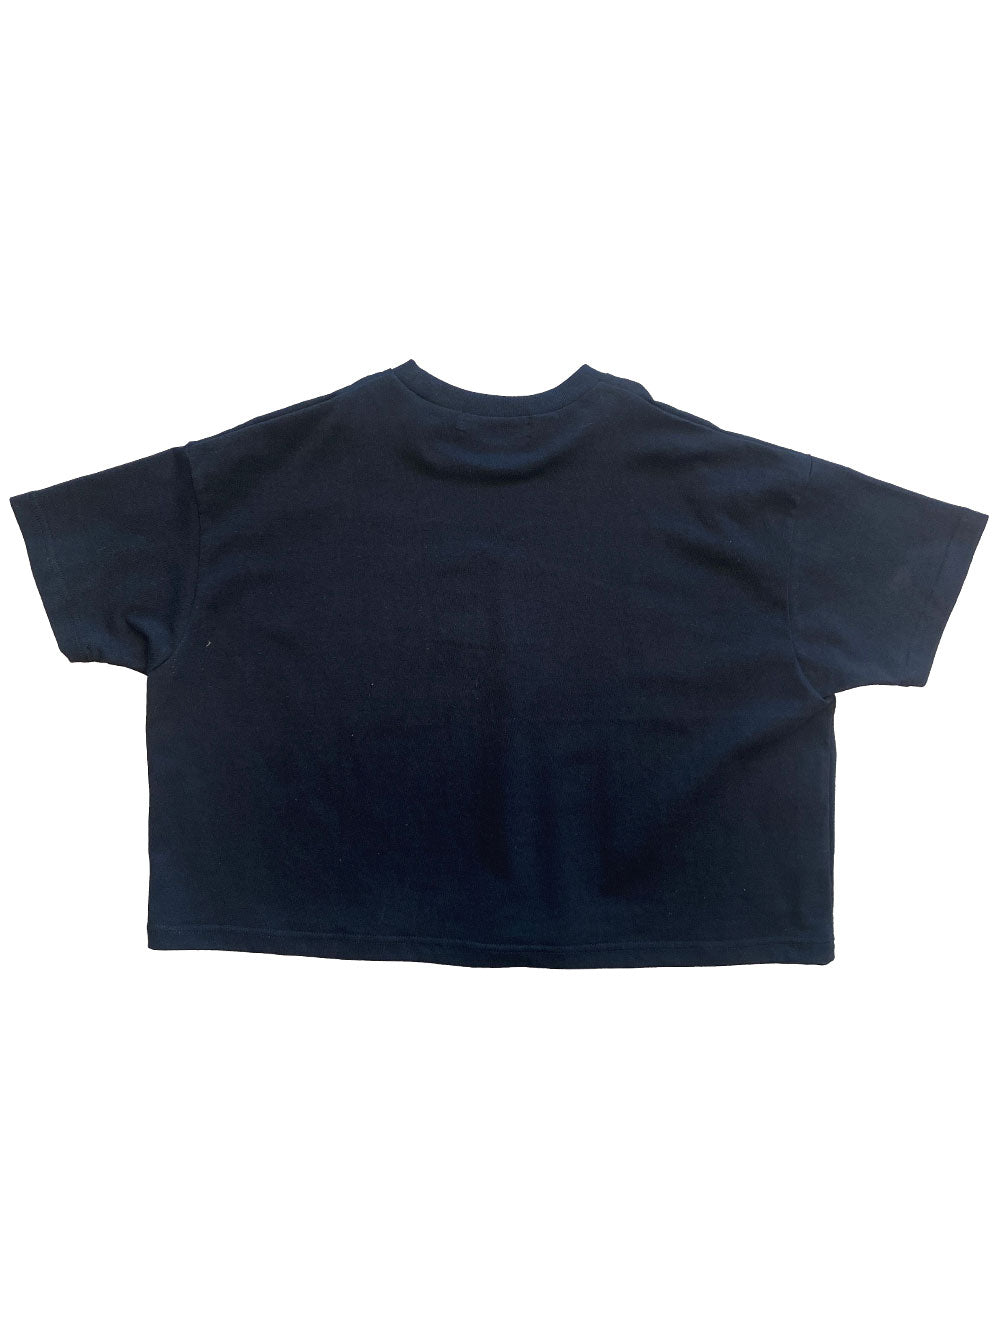 Nunuforme Logo Black T-Shirt - Shan and Toad - Luxury Kidswear Shop